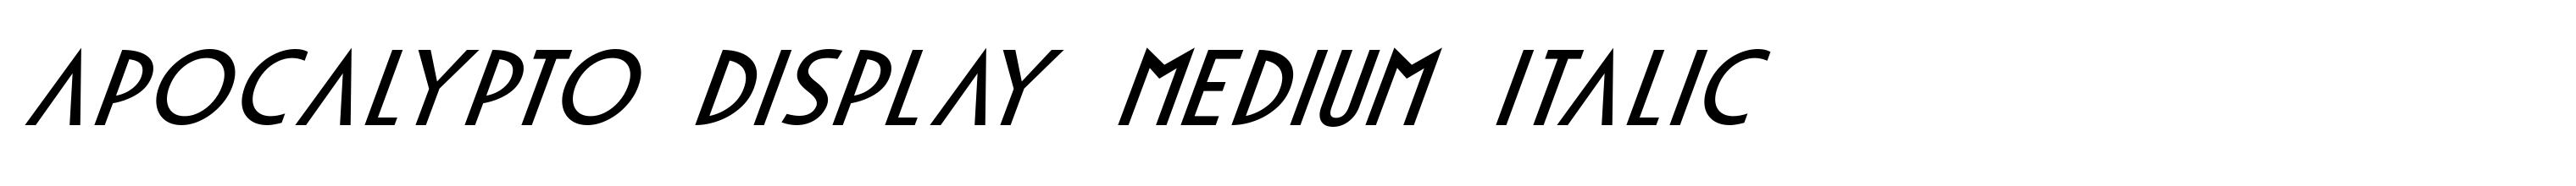 Apocalypto Display Medium Italic